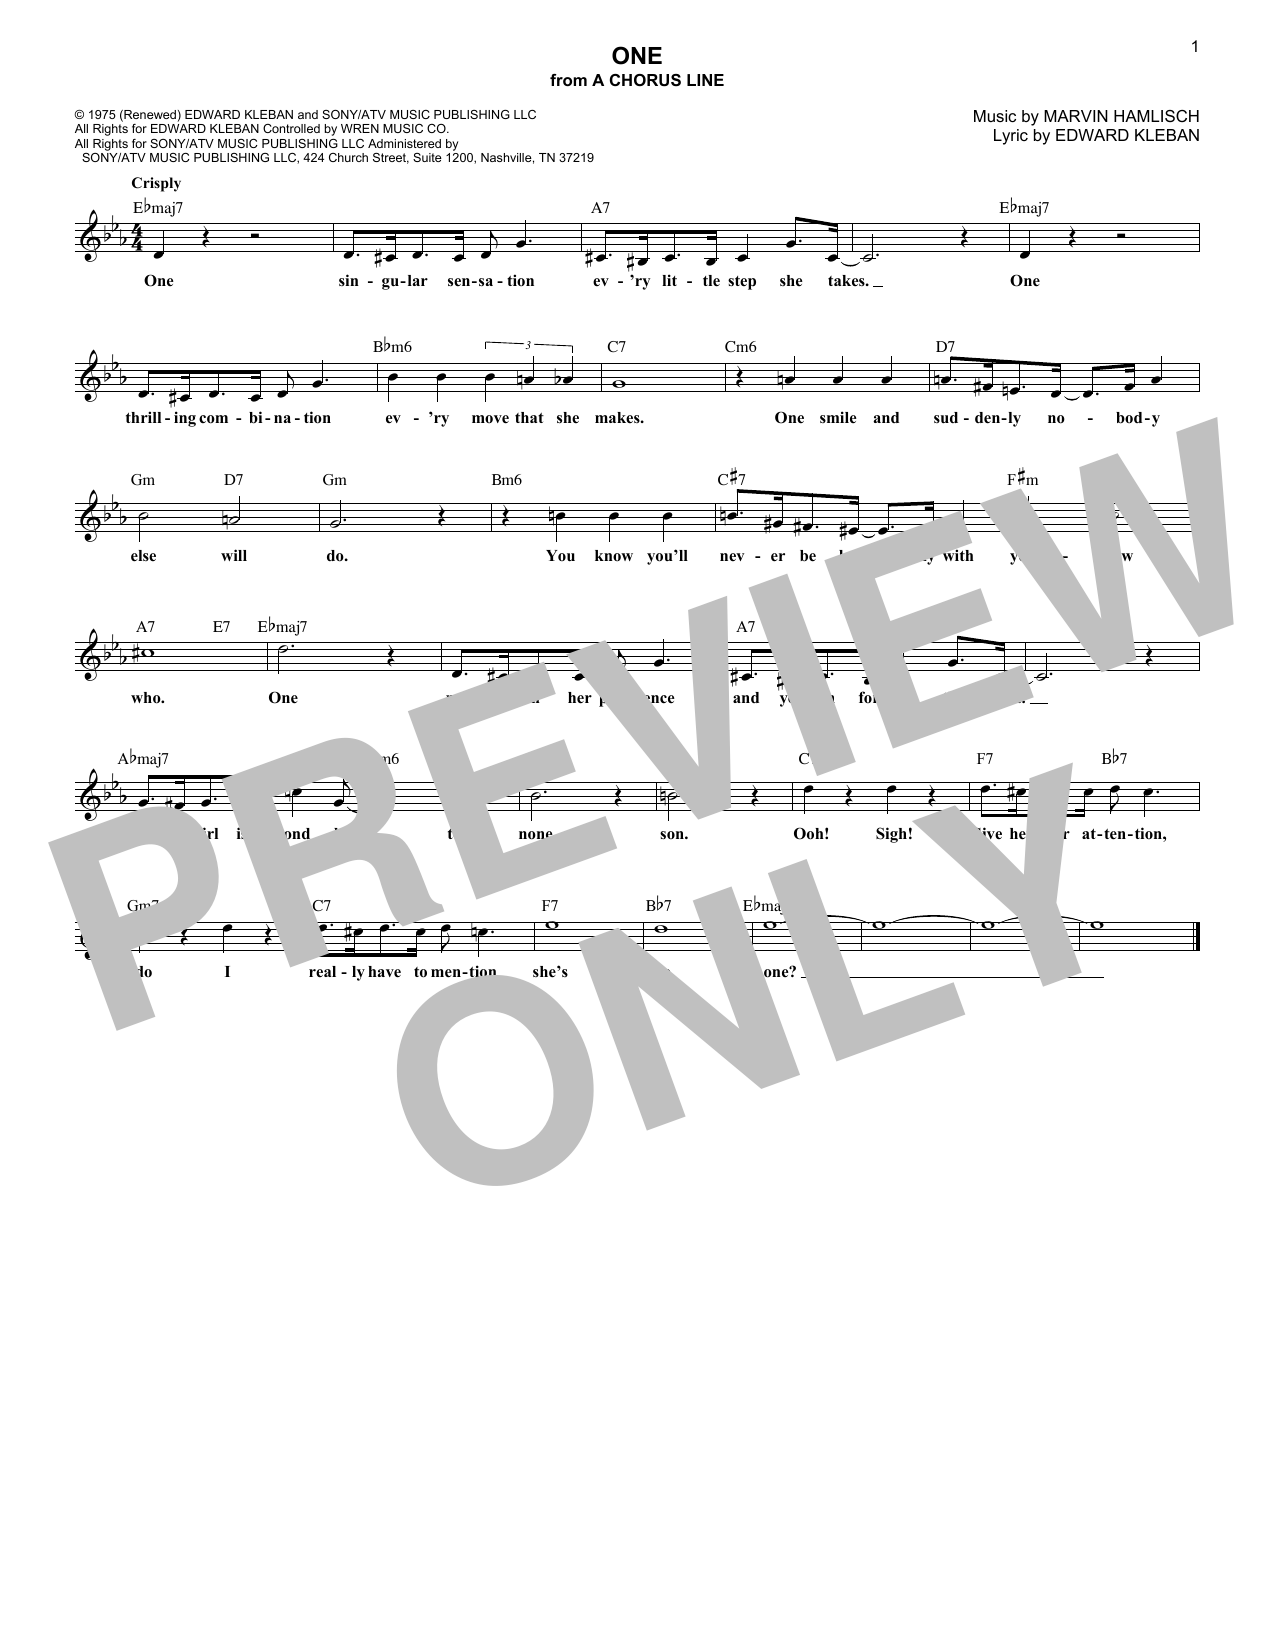 Download Marvin Hamlisch One (from A Chorus Line) Sheet Music